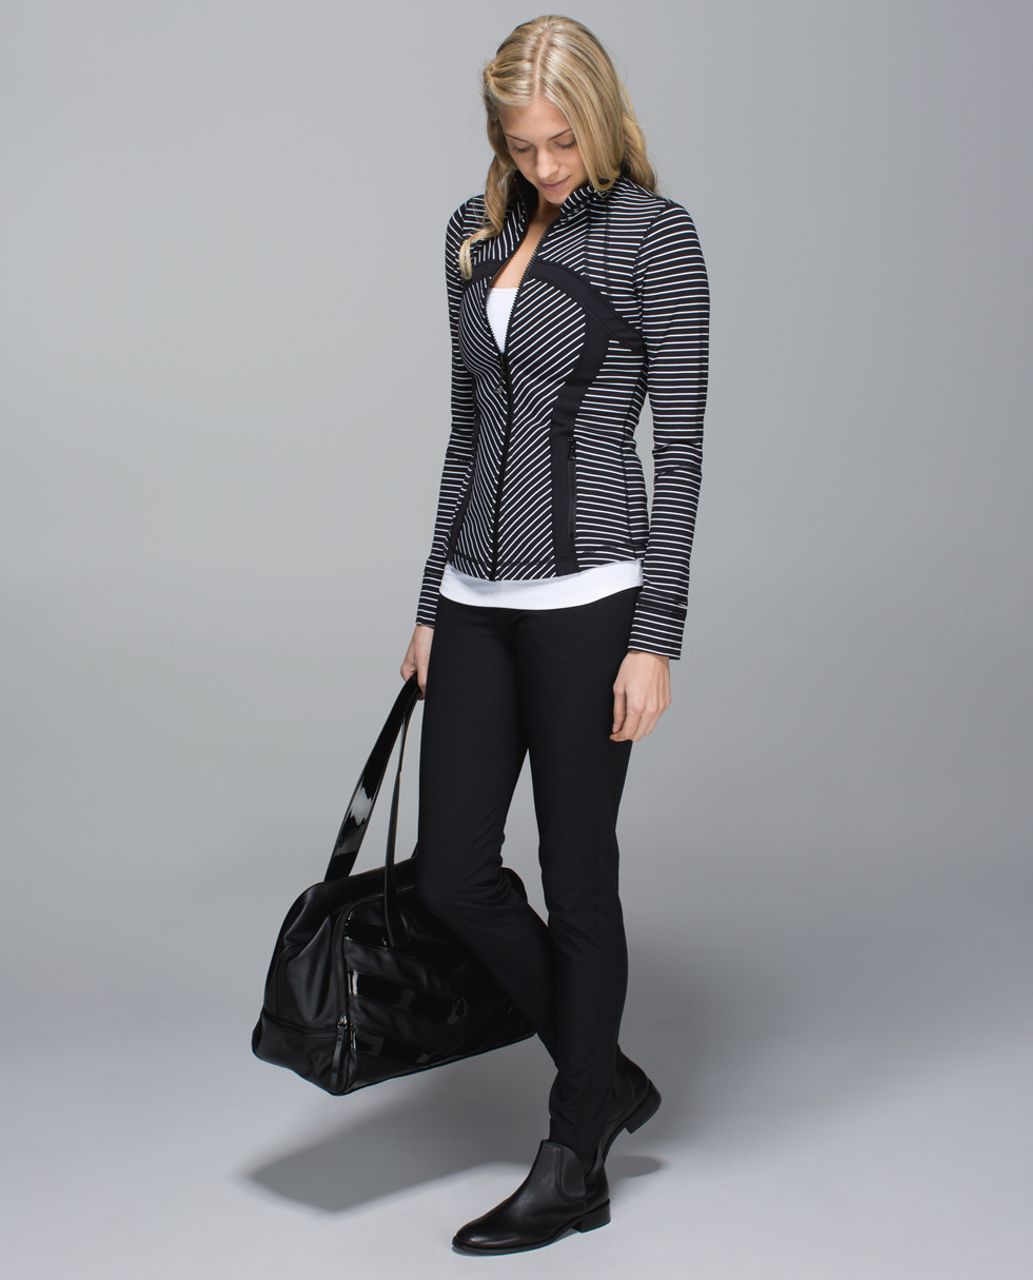 Lululemon Define Jacket - Parallel Stripe Black White / Black